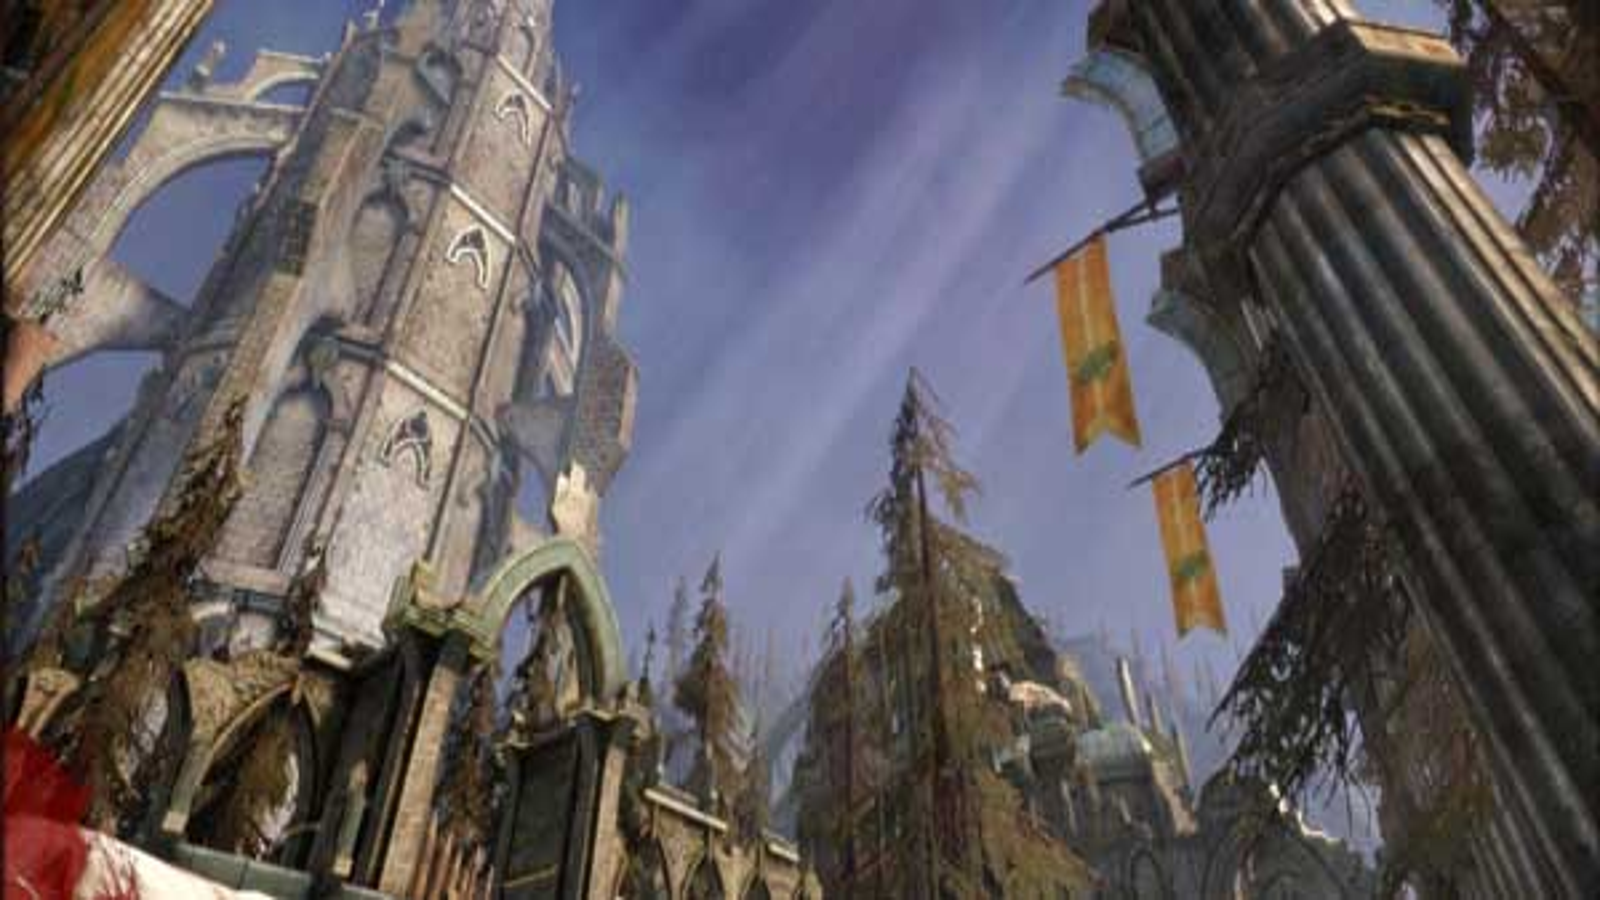 Dragon Age Origins Gets Fan-Made Remaster